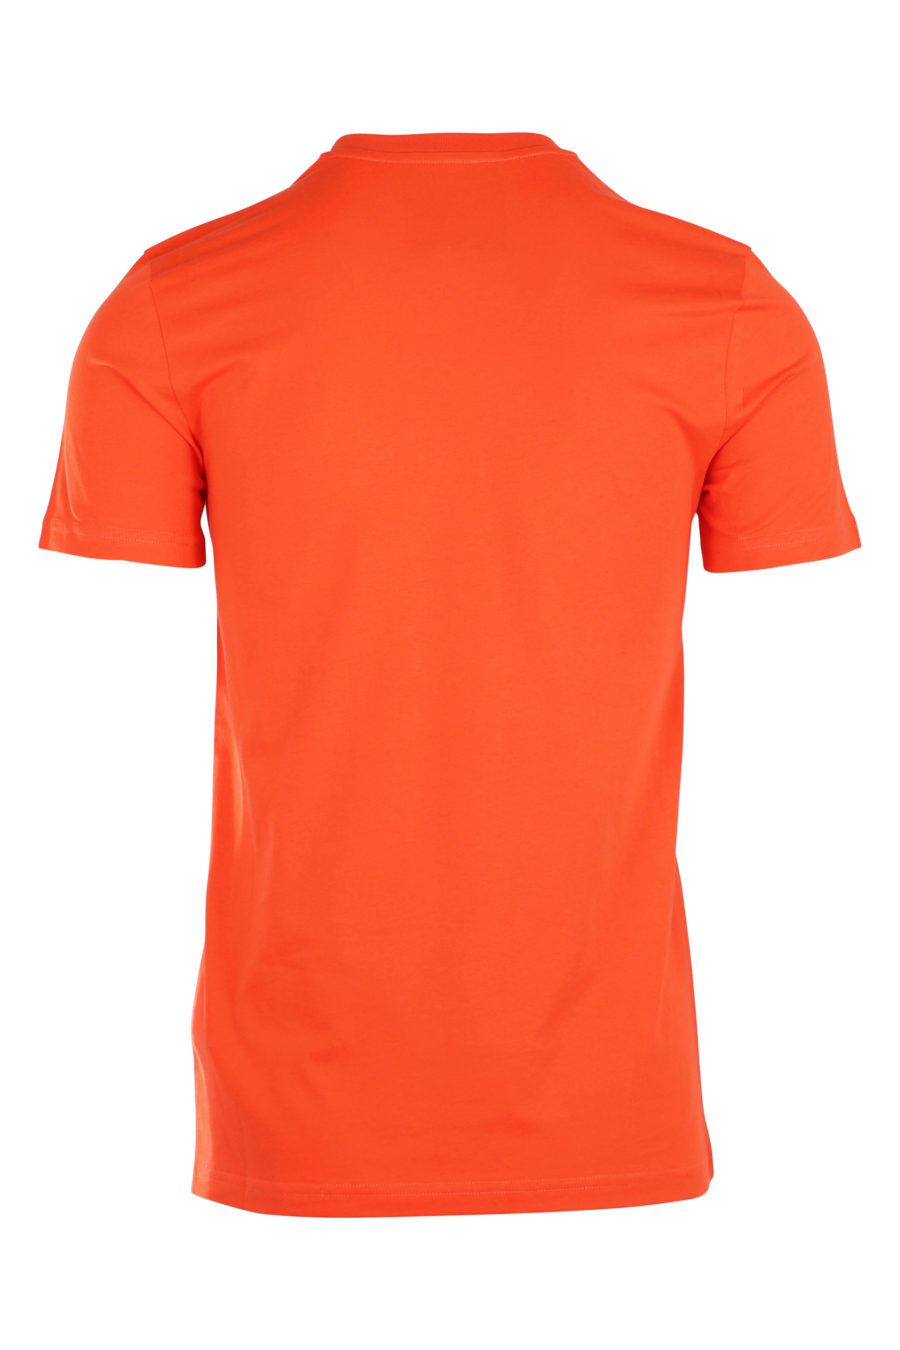 T-shirt orange avec logo milano "fantasy" - IMG 9938